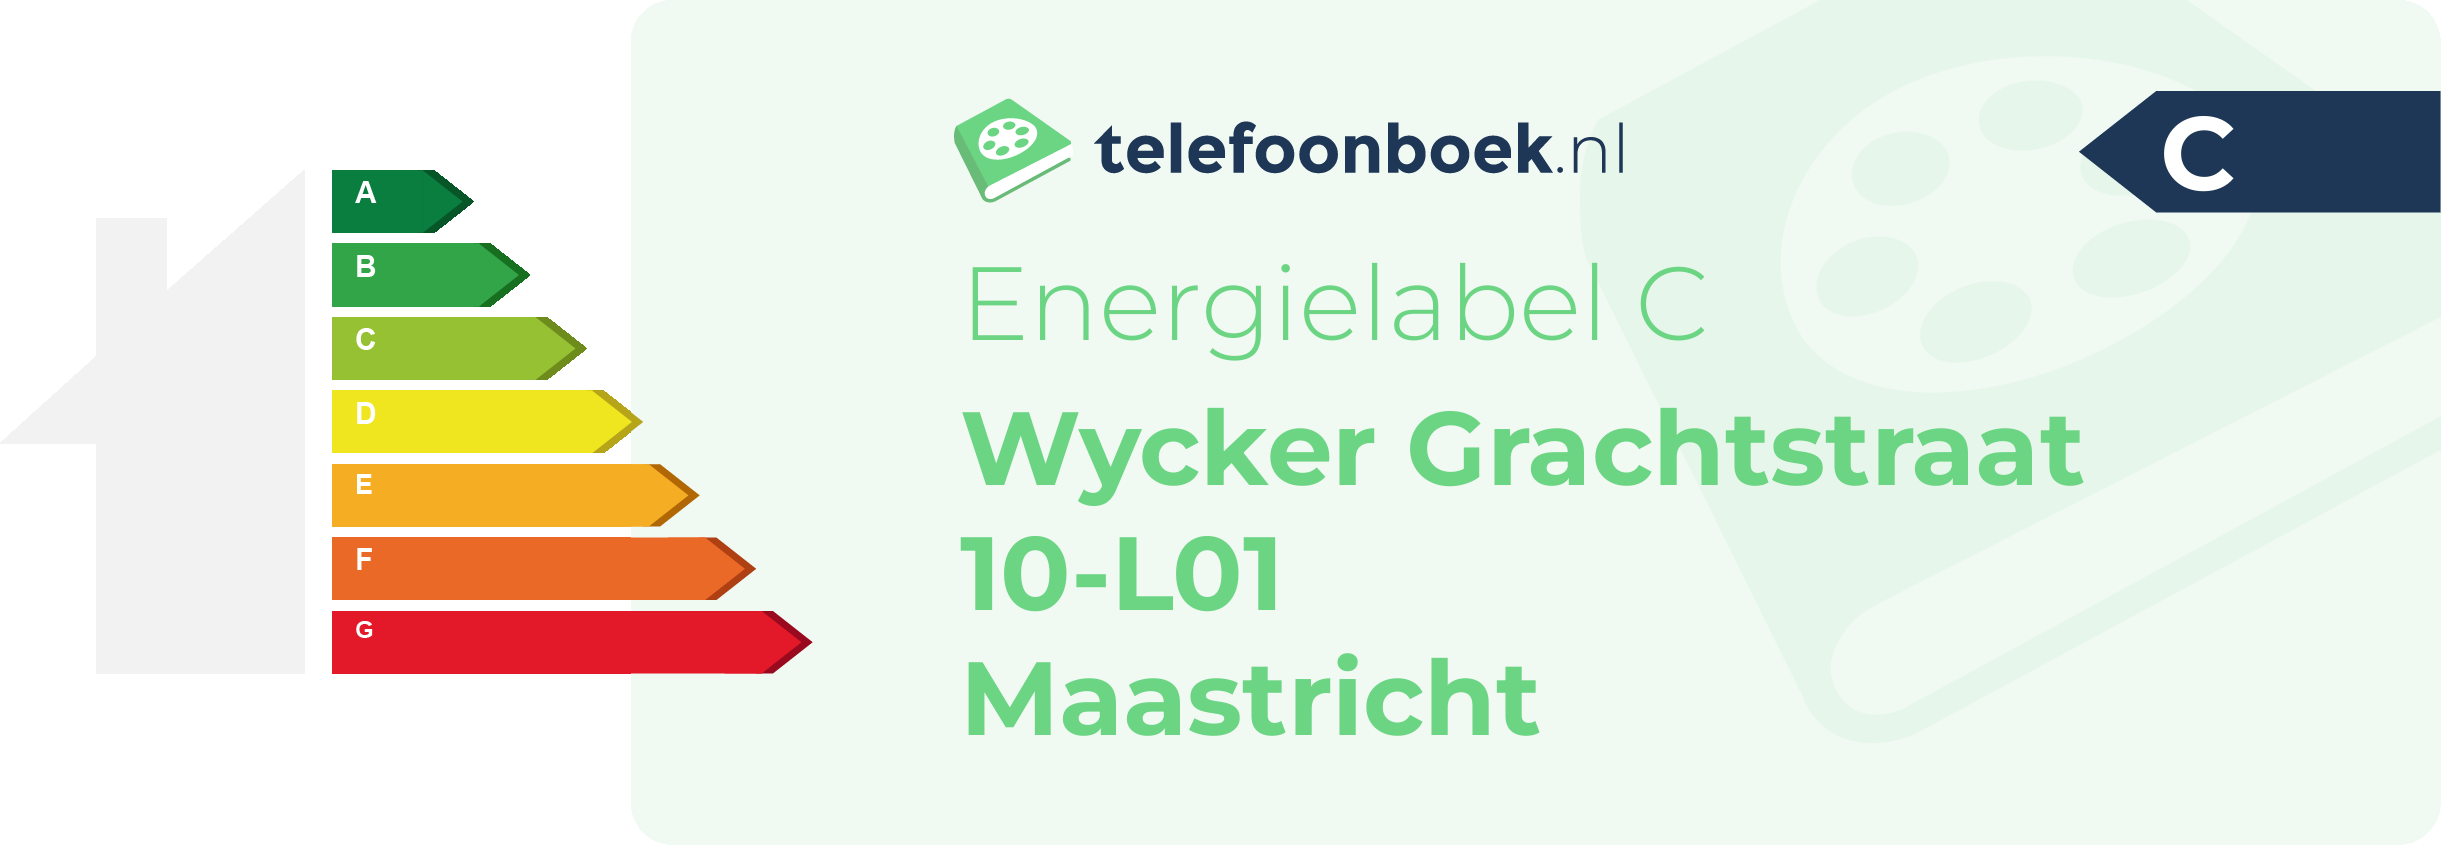 Energielabel Wycker Grachtstraat 10-L01 Maastricht